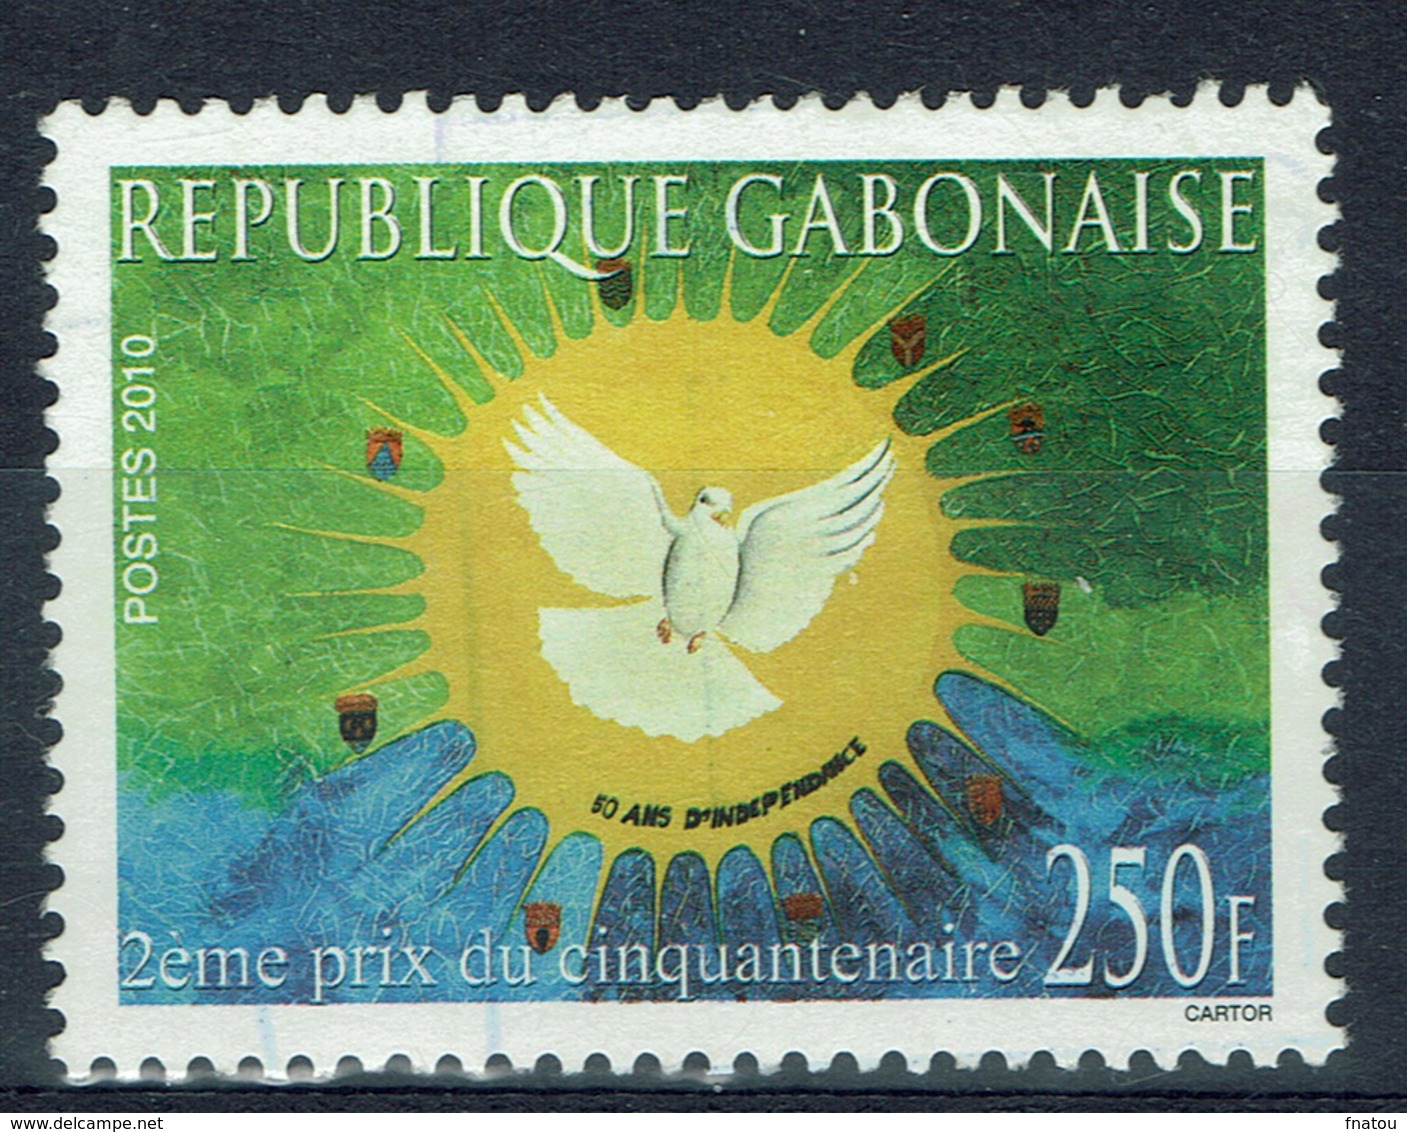 Gabon, Independence, 2010, VFU - Gabon